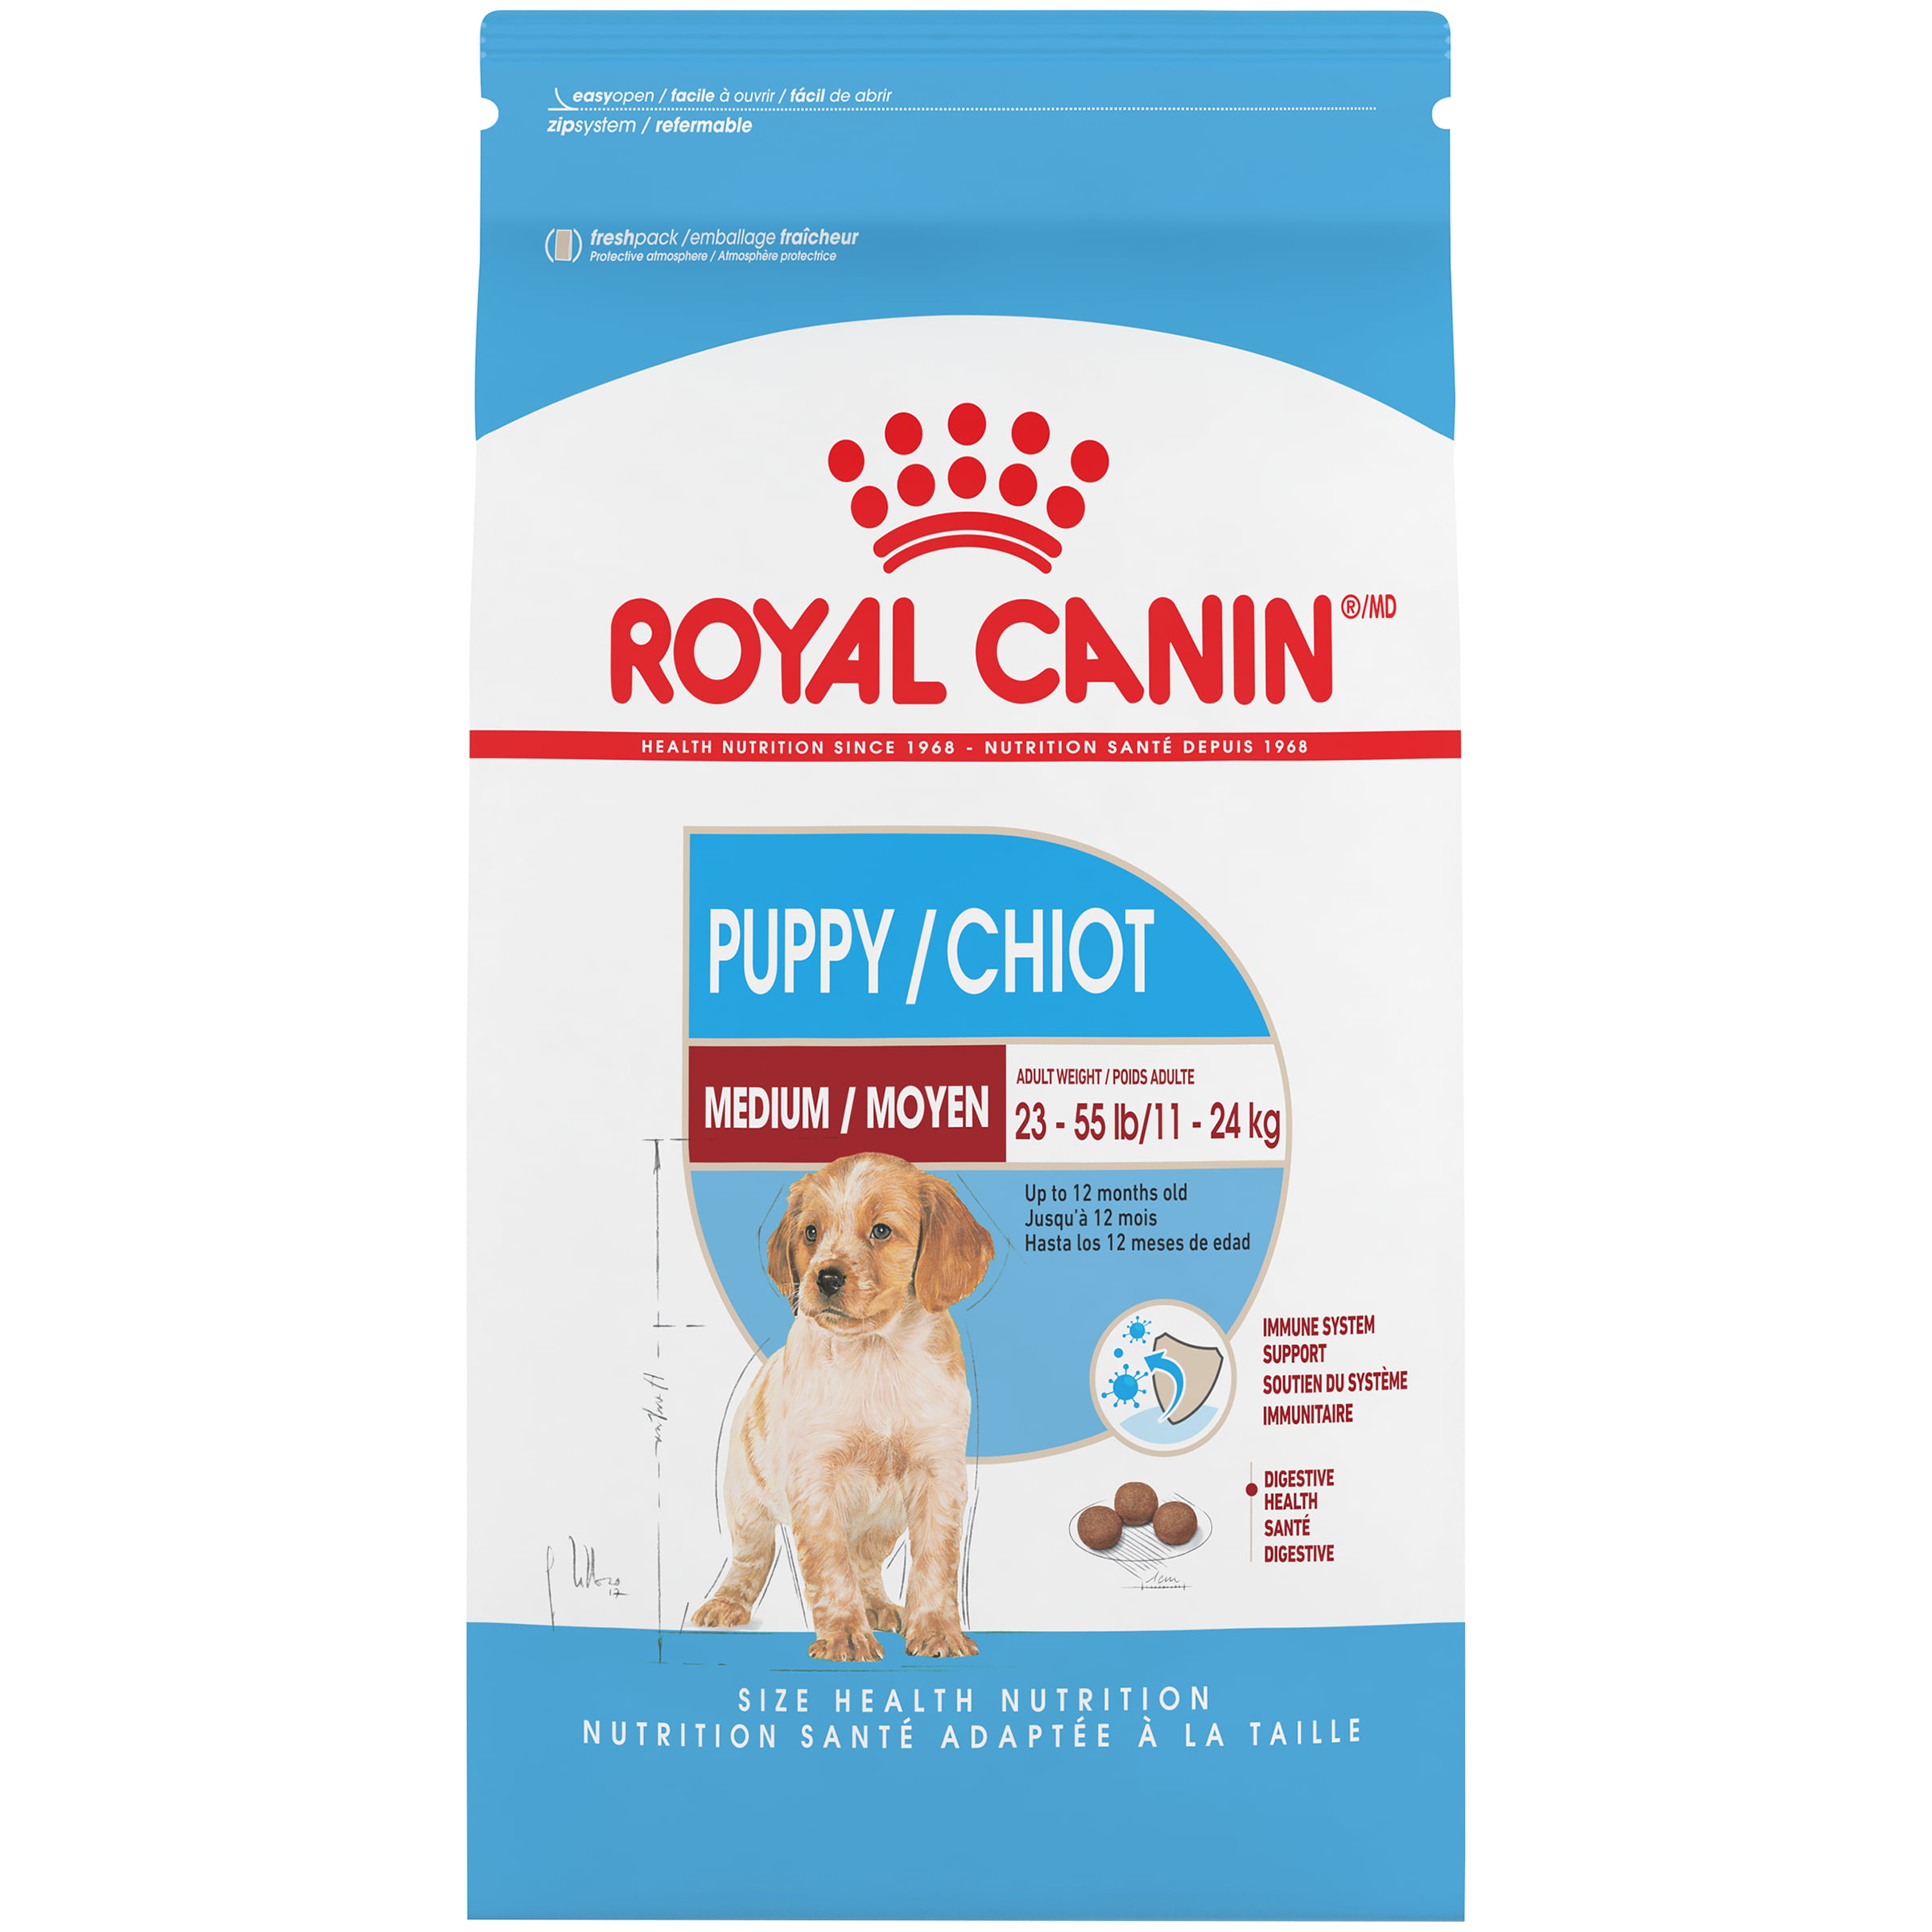 royal canin price list 2018